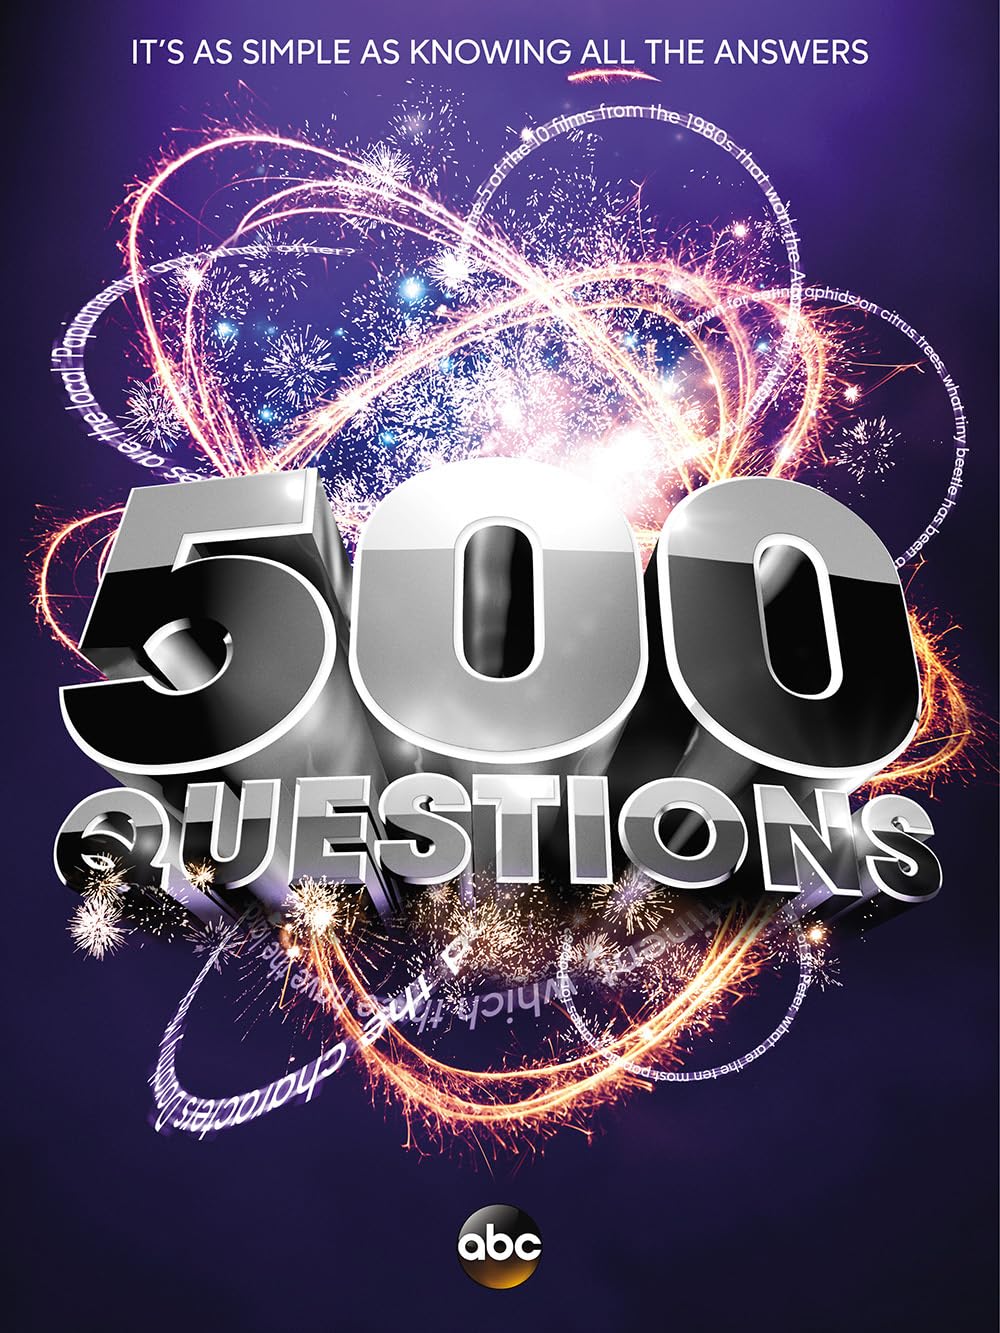 500 Questions